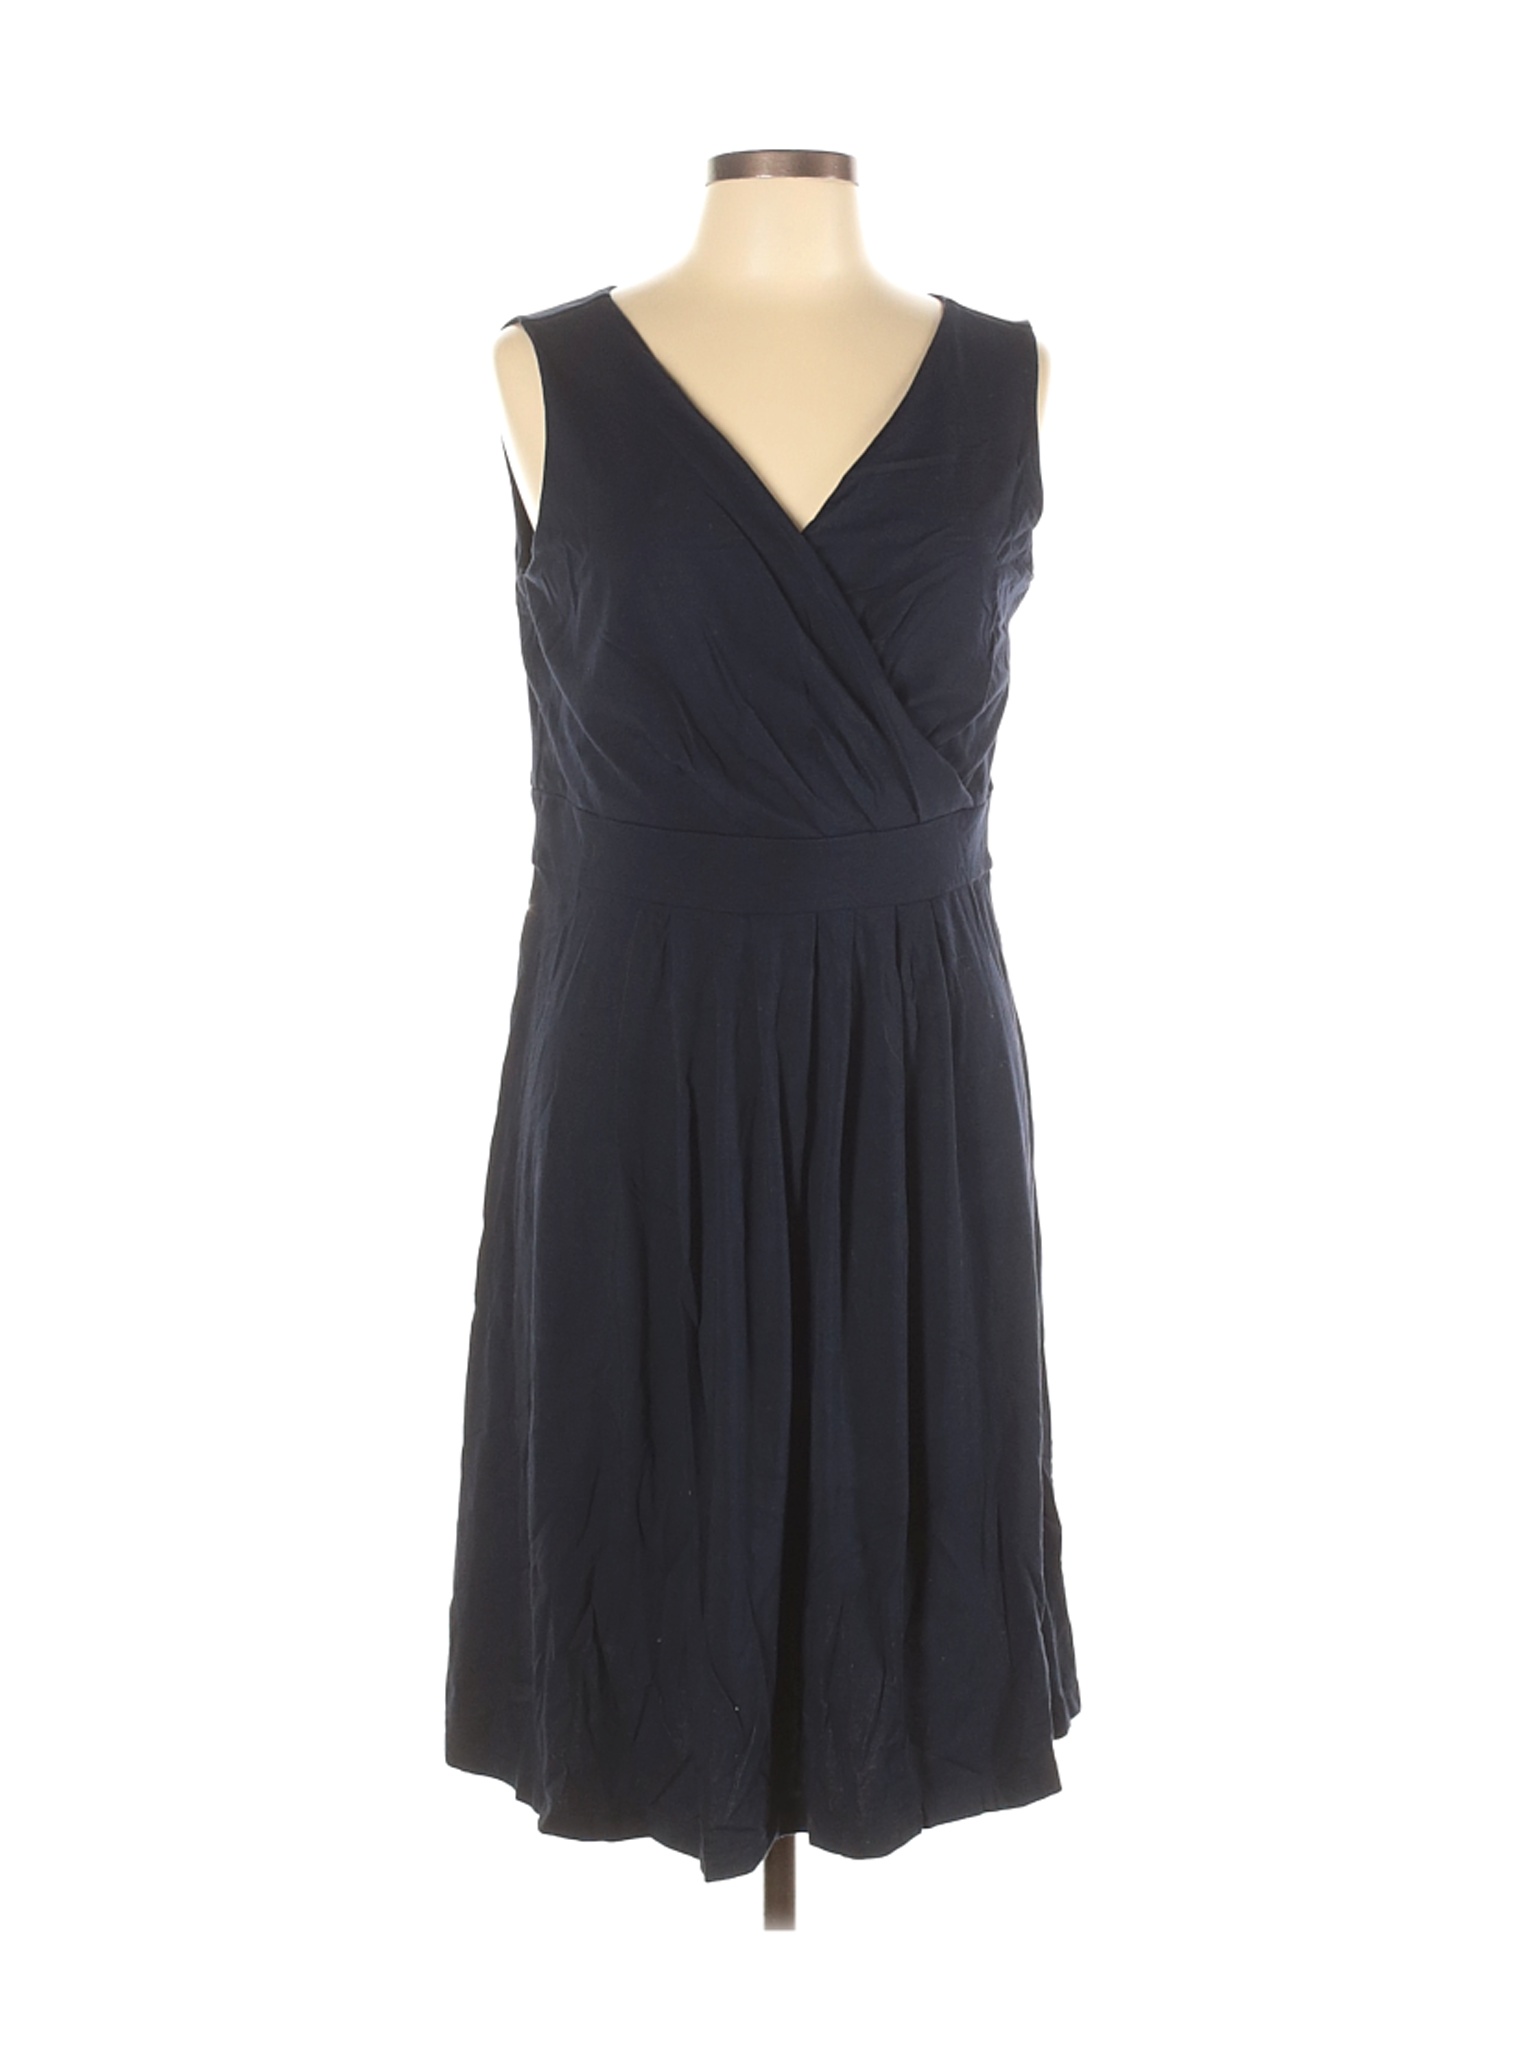 Lands' End Women Black Casual Dress L | eBay